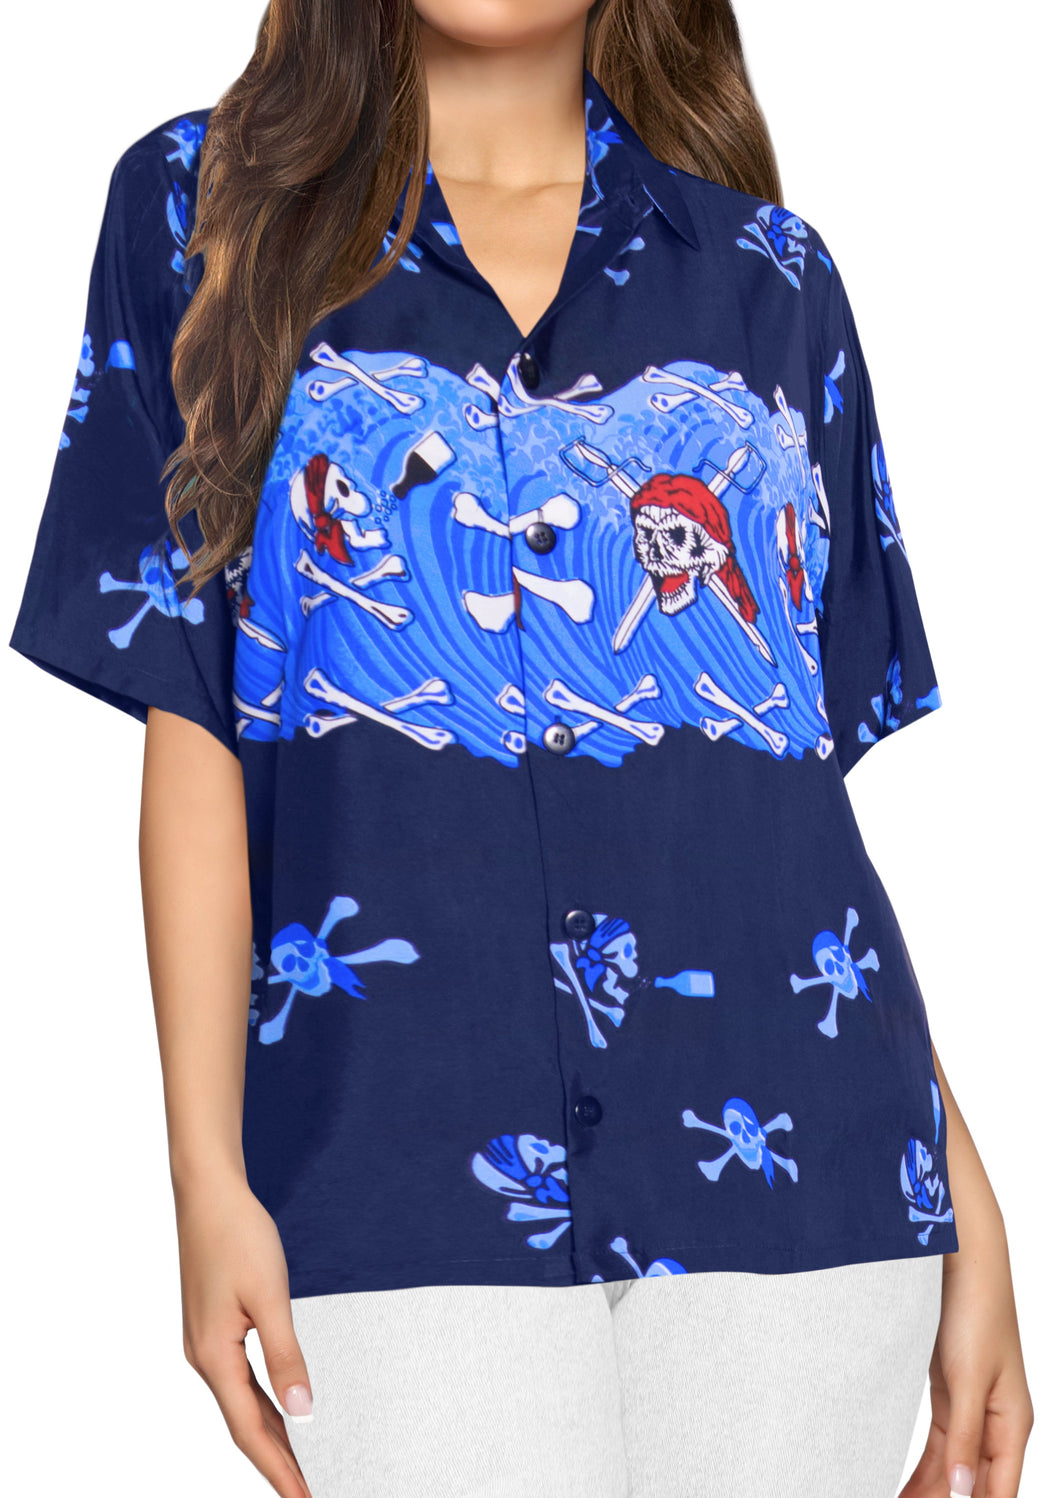 la-leela-womens-skull-halloween-costume-casual-beach-hawaiian-shirts-printed-blue-skull-pirates-printe-Blue_W970